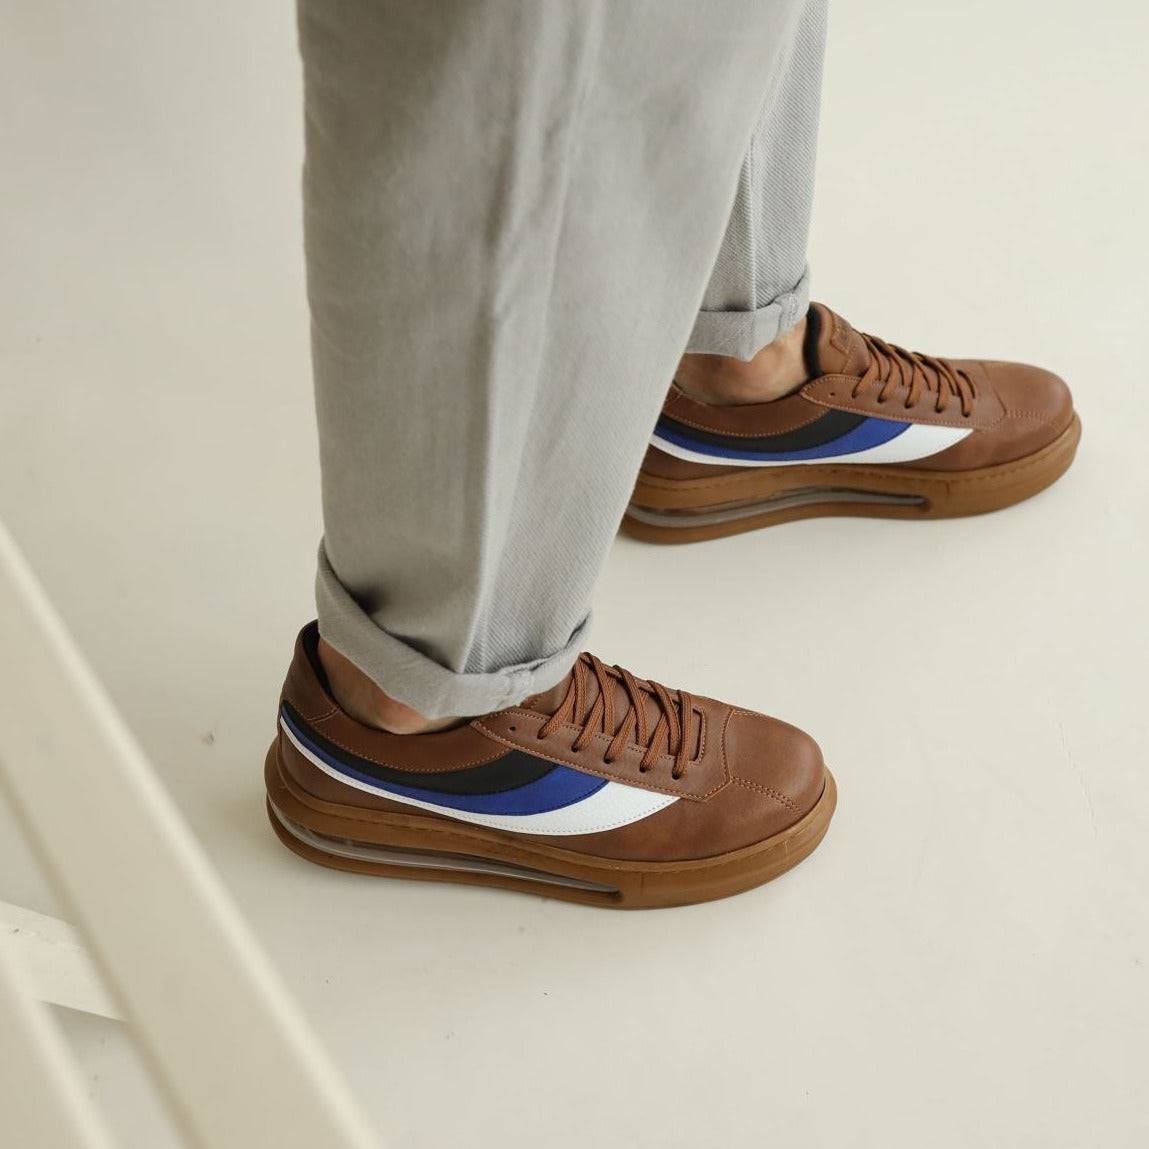 Casual Men's Sneakers With Air Soles by Apollo Moda | Espana Earthy Horizon